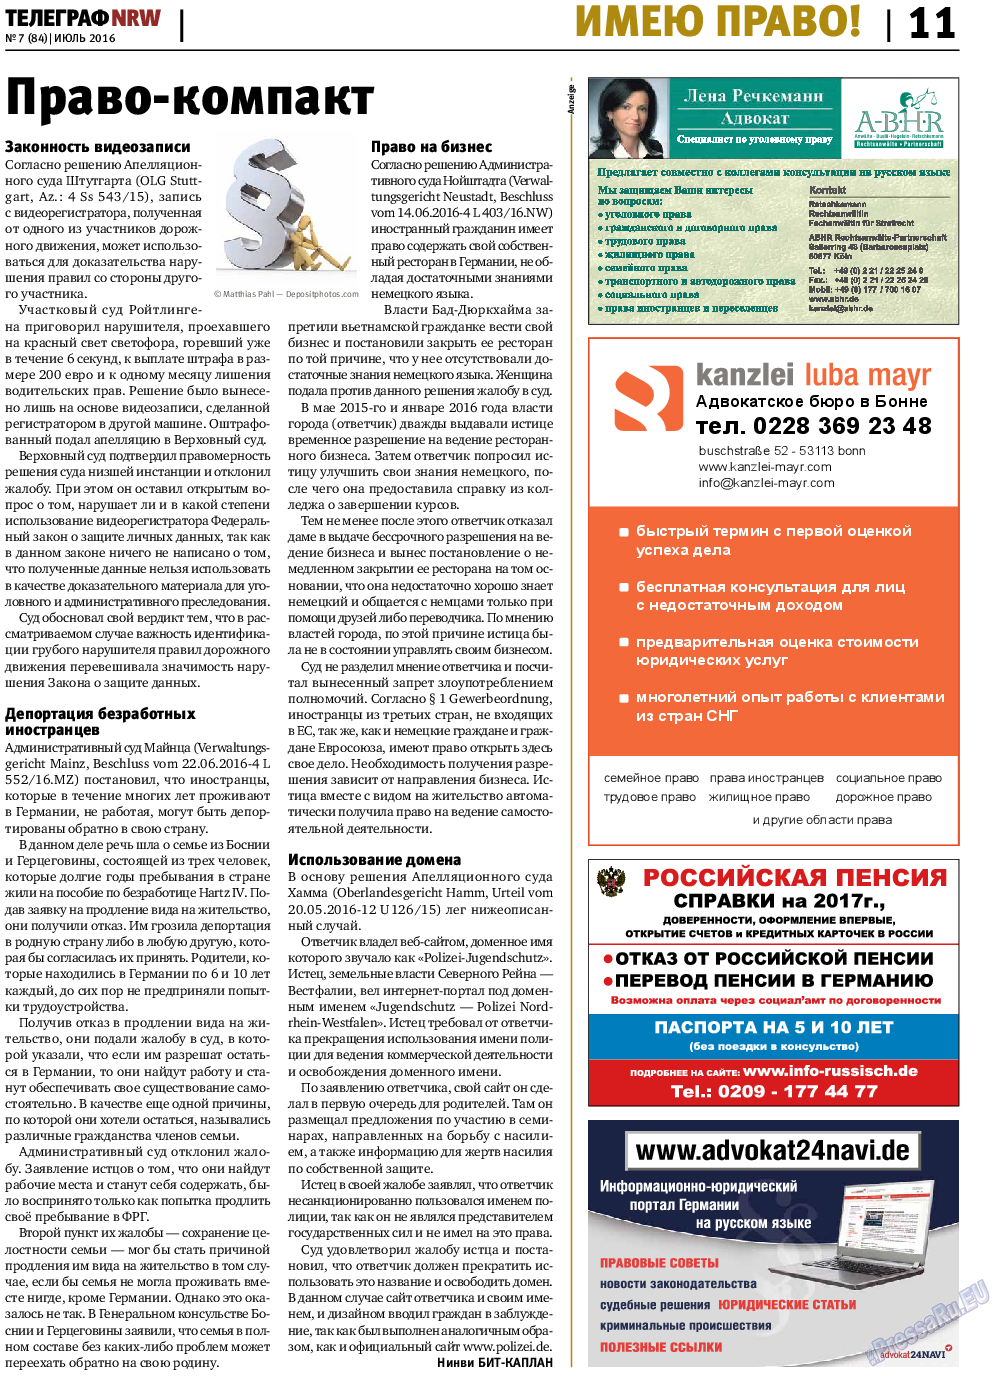 Телеграф NRW, газета. 2016 №7 стр.11